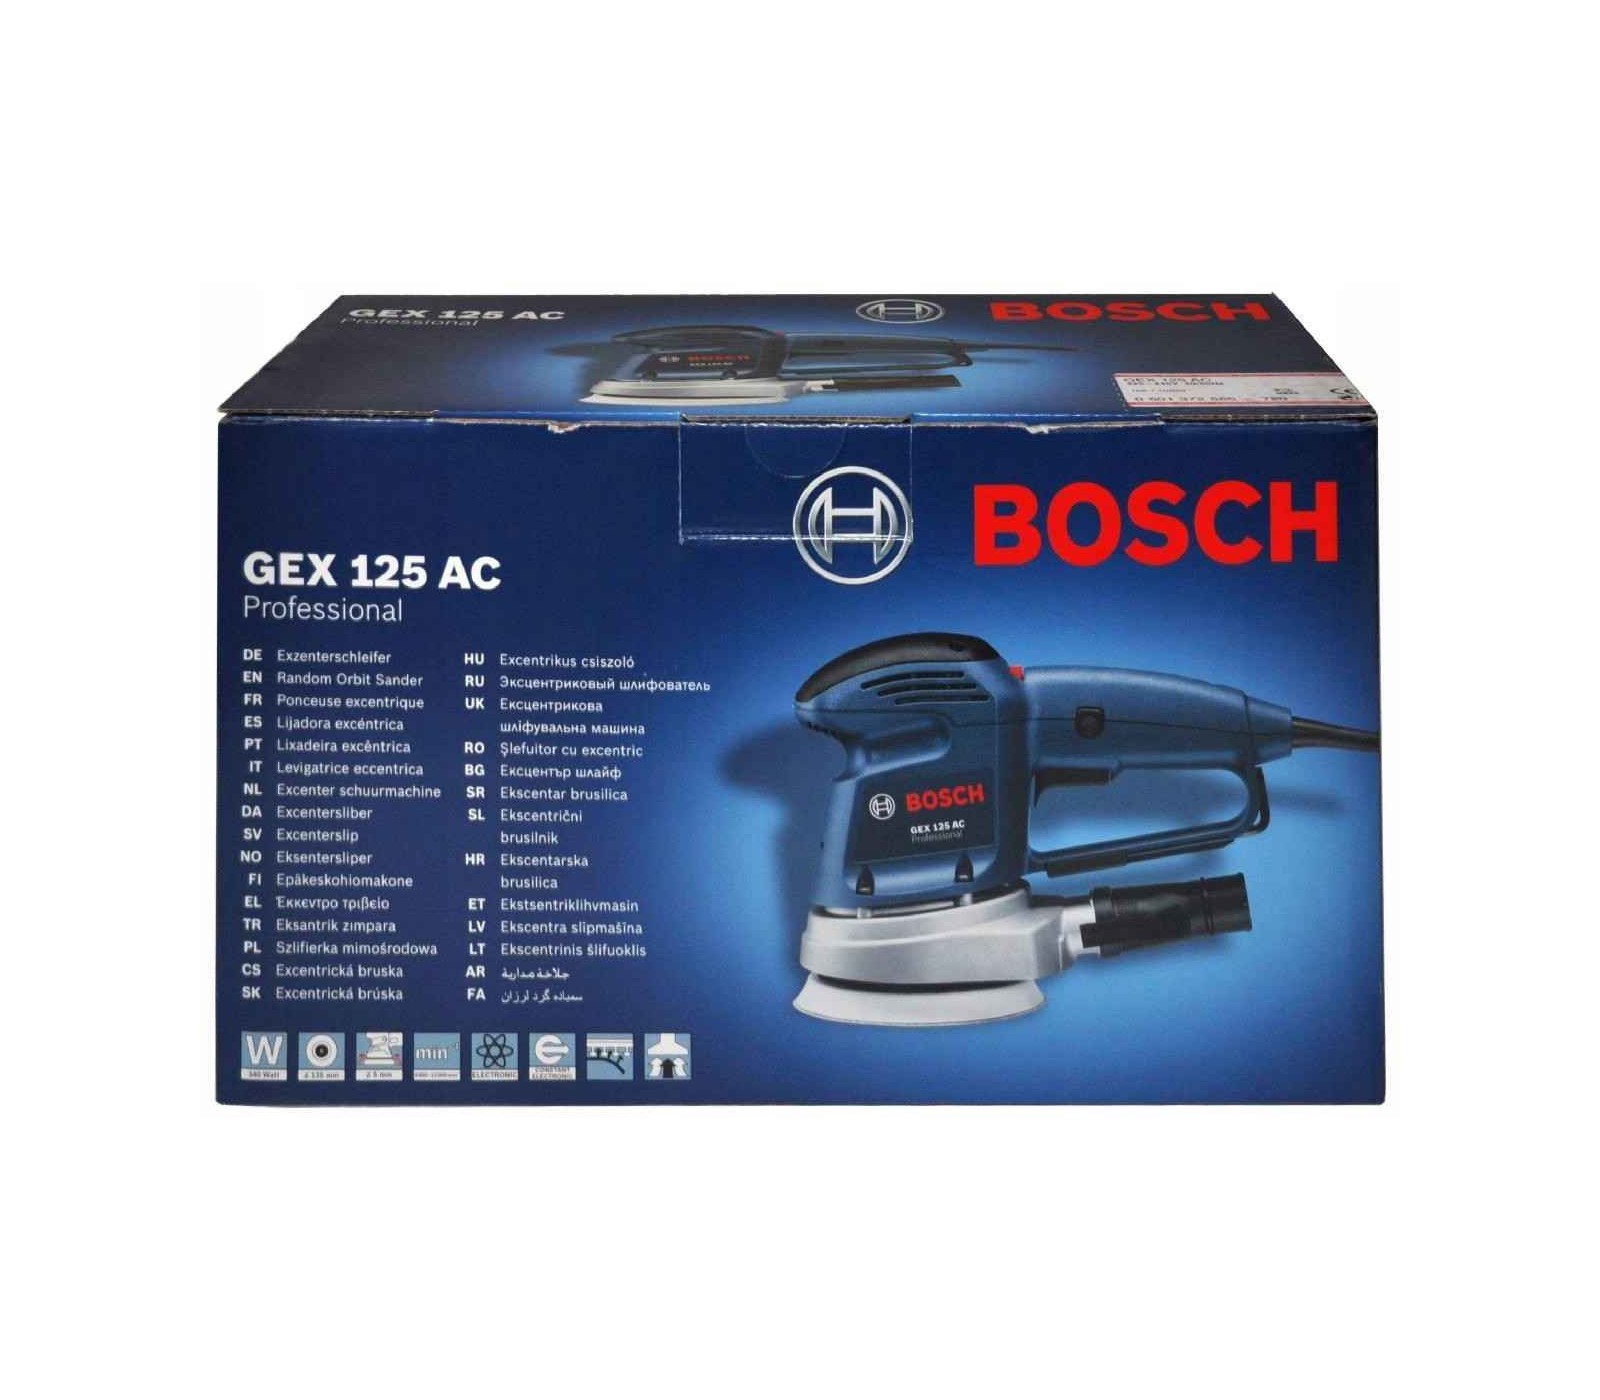 Bosch sander W 125 orbit 125 Random 340 mm, GEX AC,